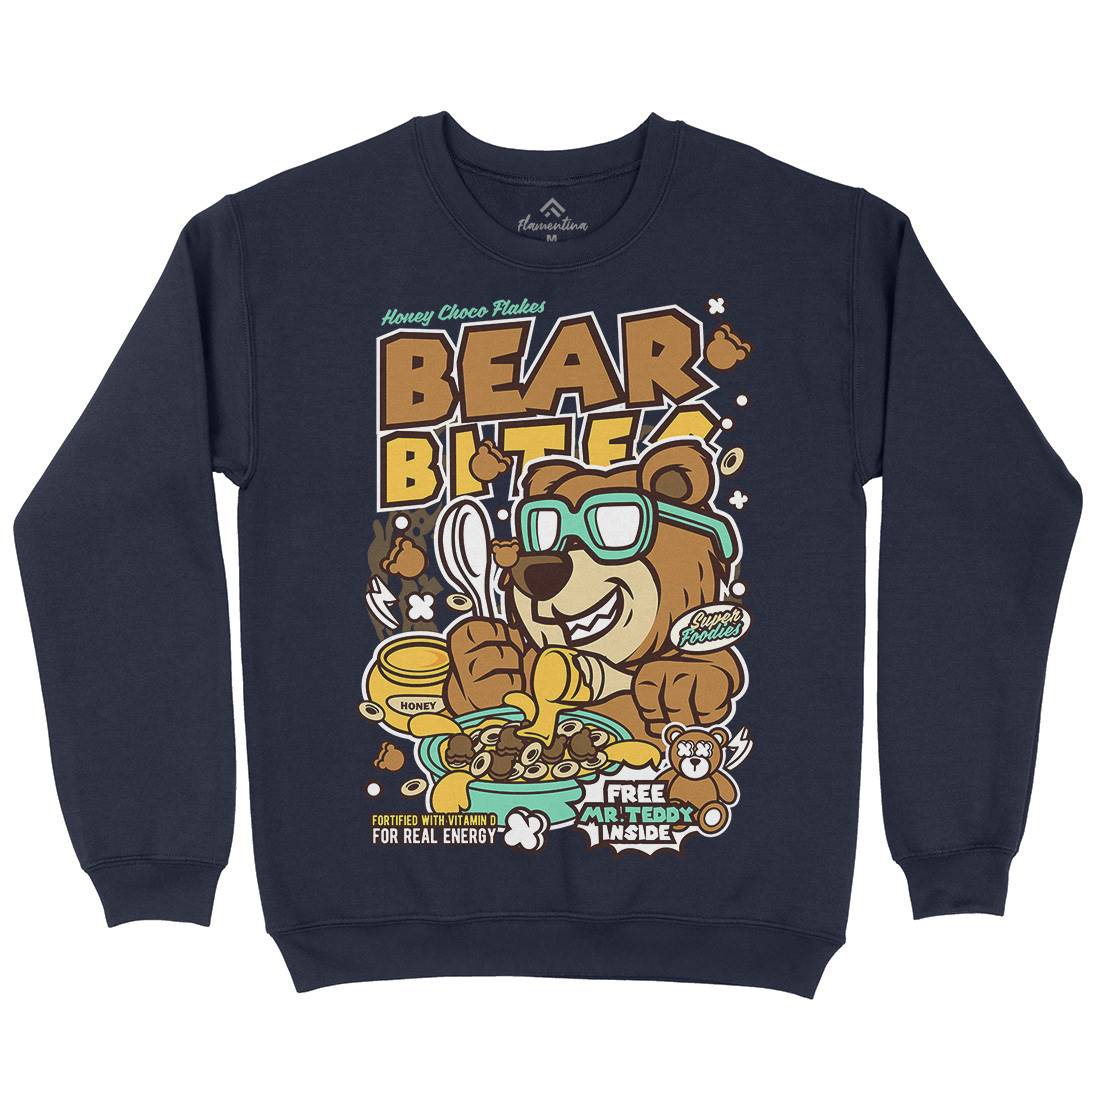 Bear Bites Kids Crew Neck Sweatshirt Food C488